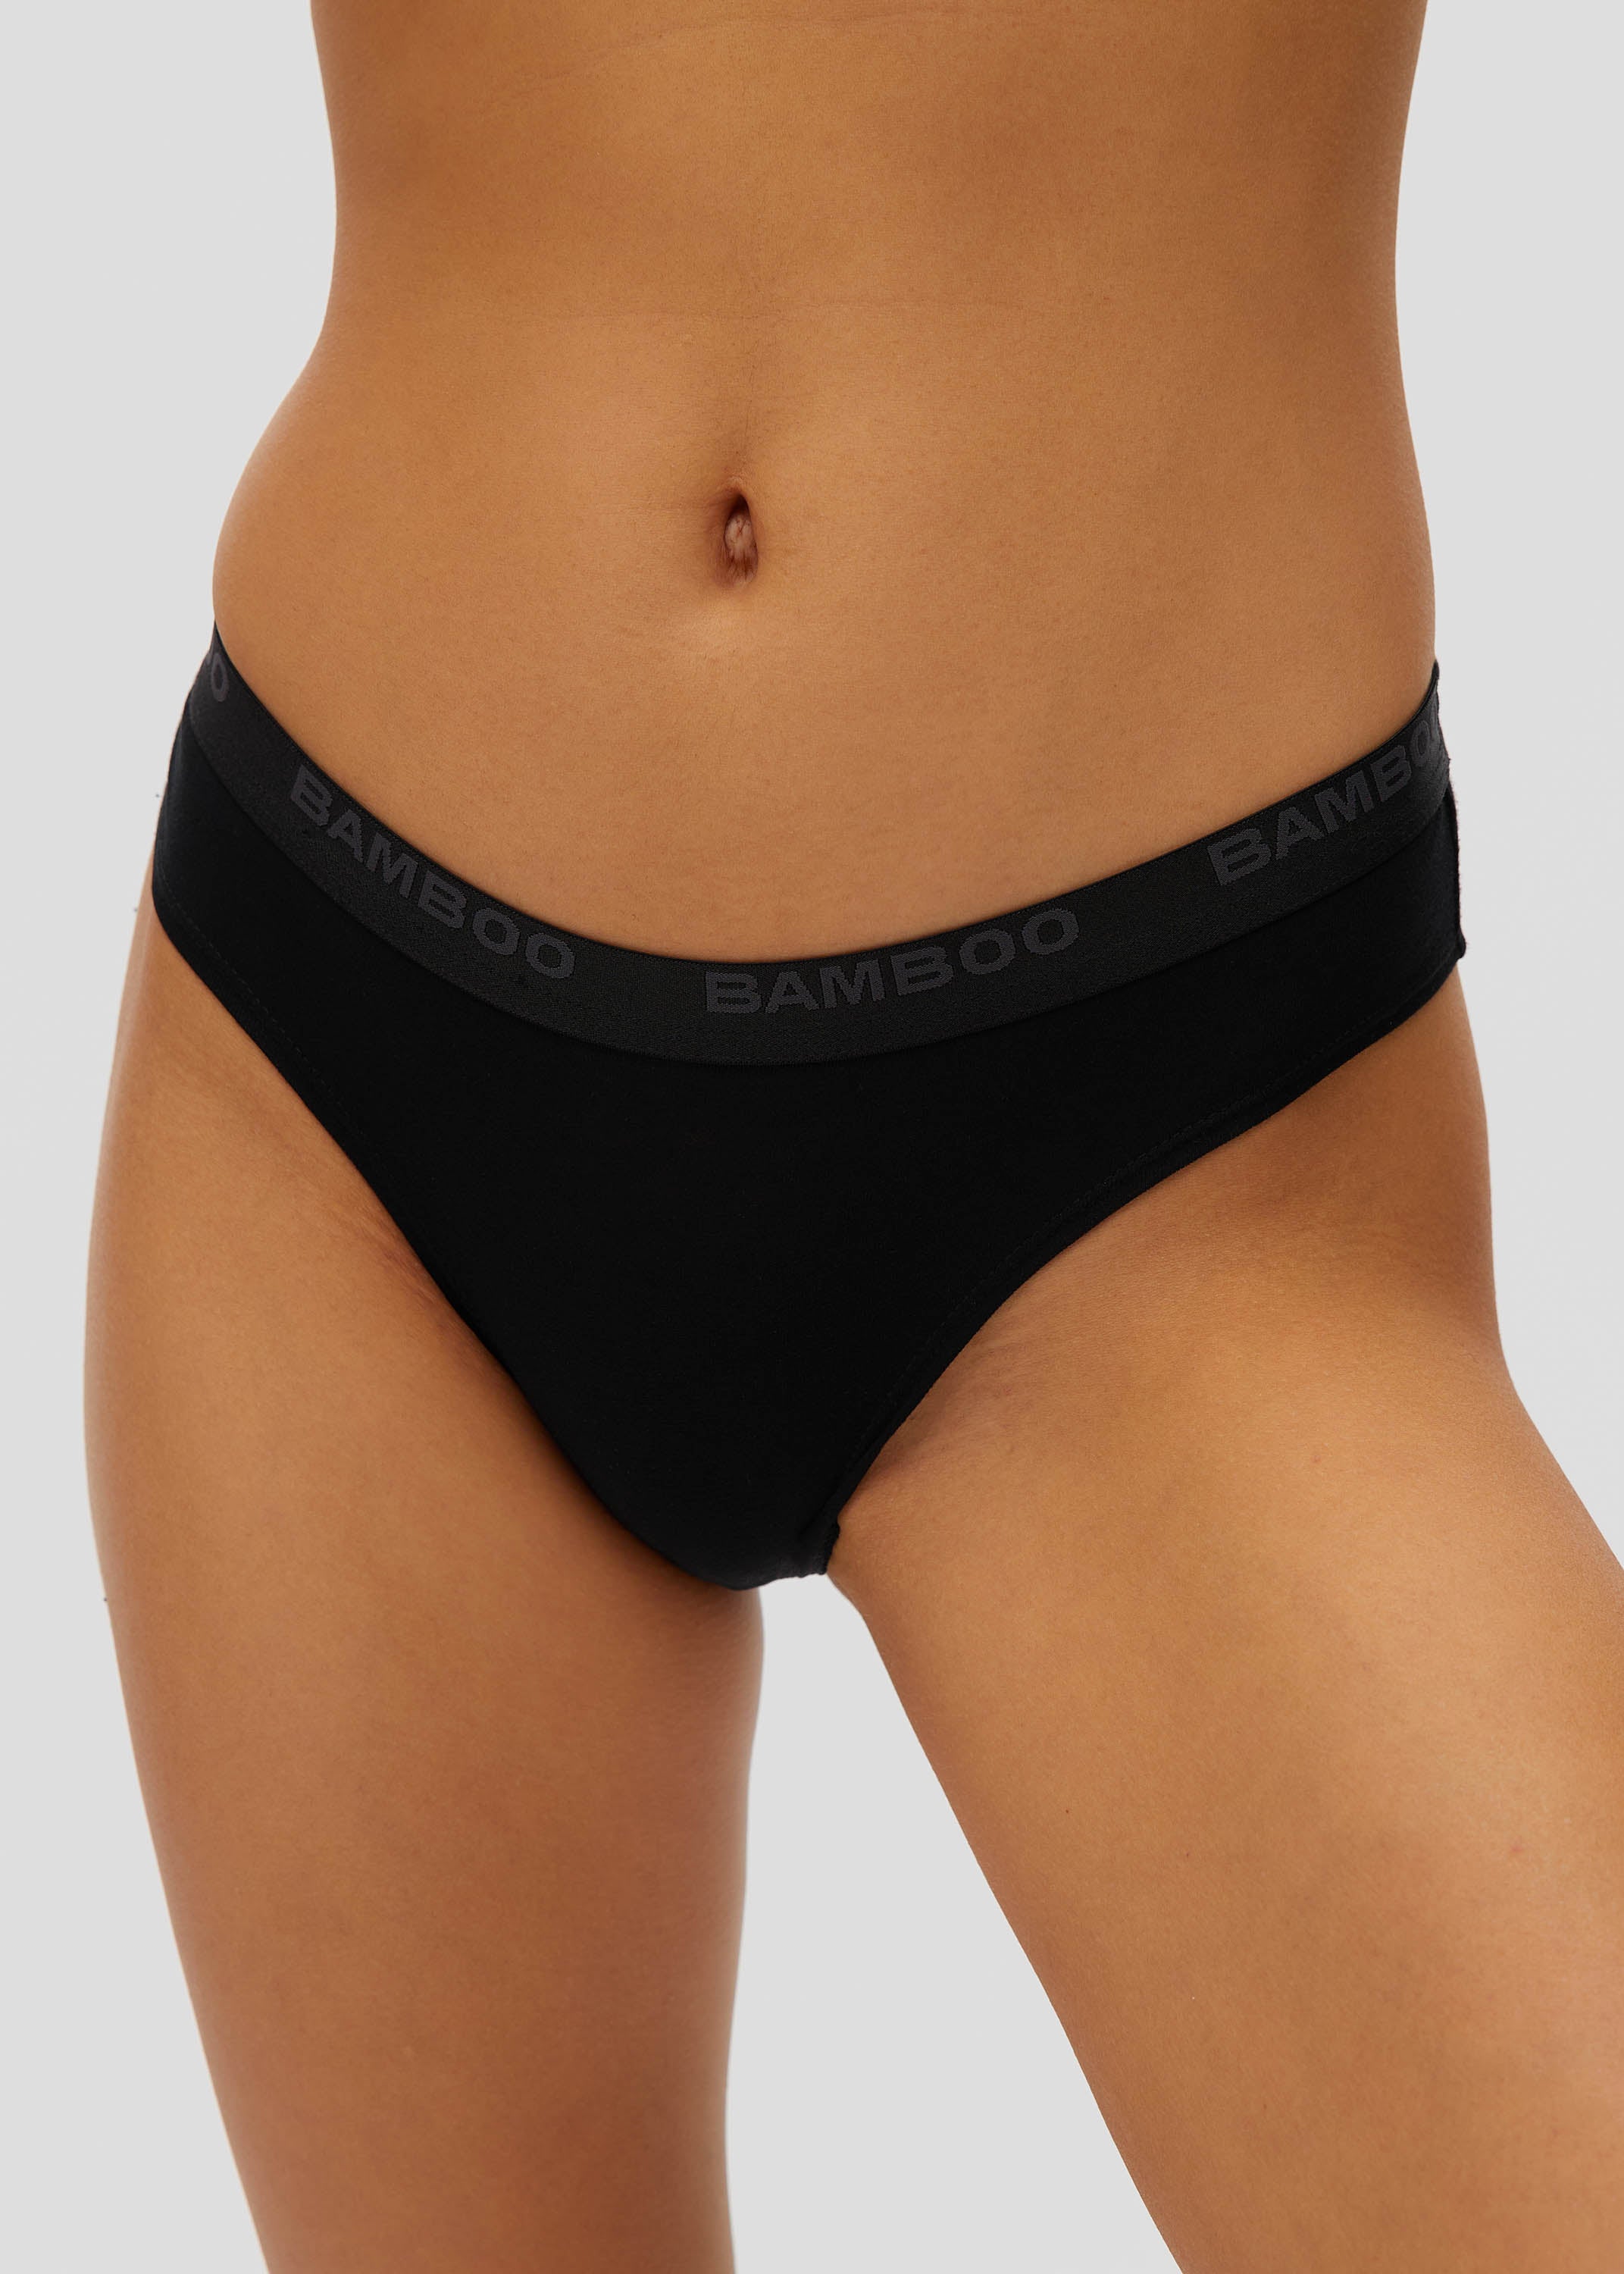 Panties Breathable Women Mid Waist Briefs Women's Underwear – YouthBaee